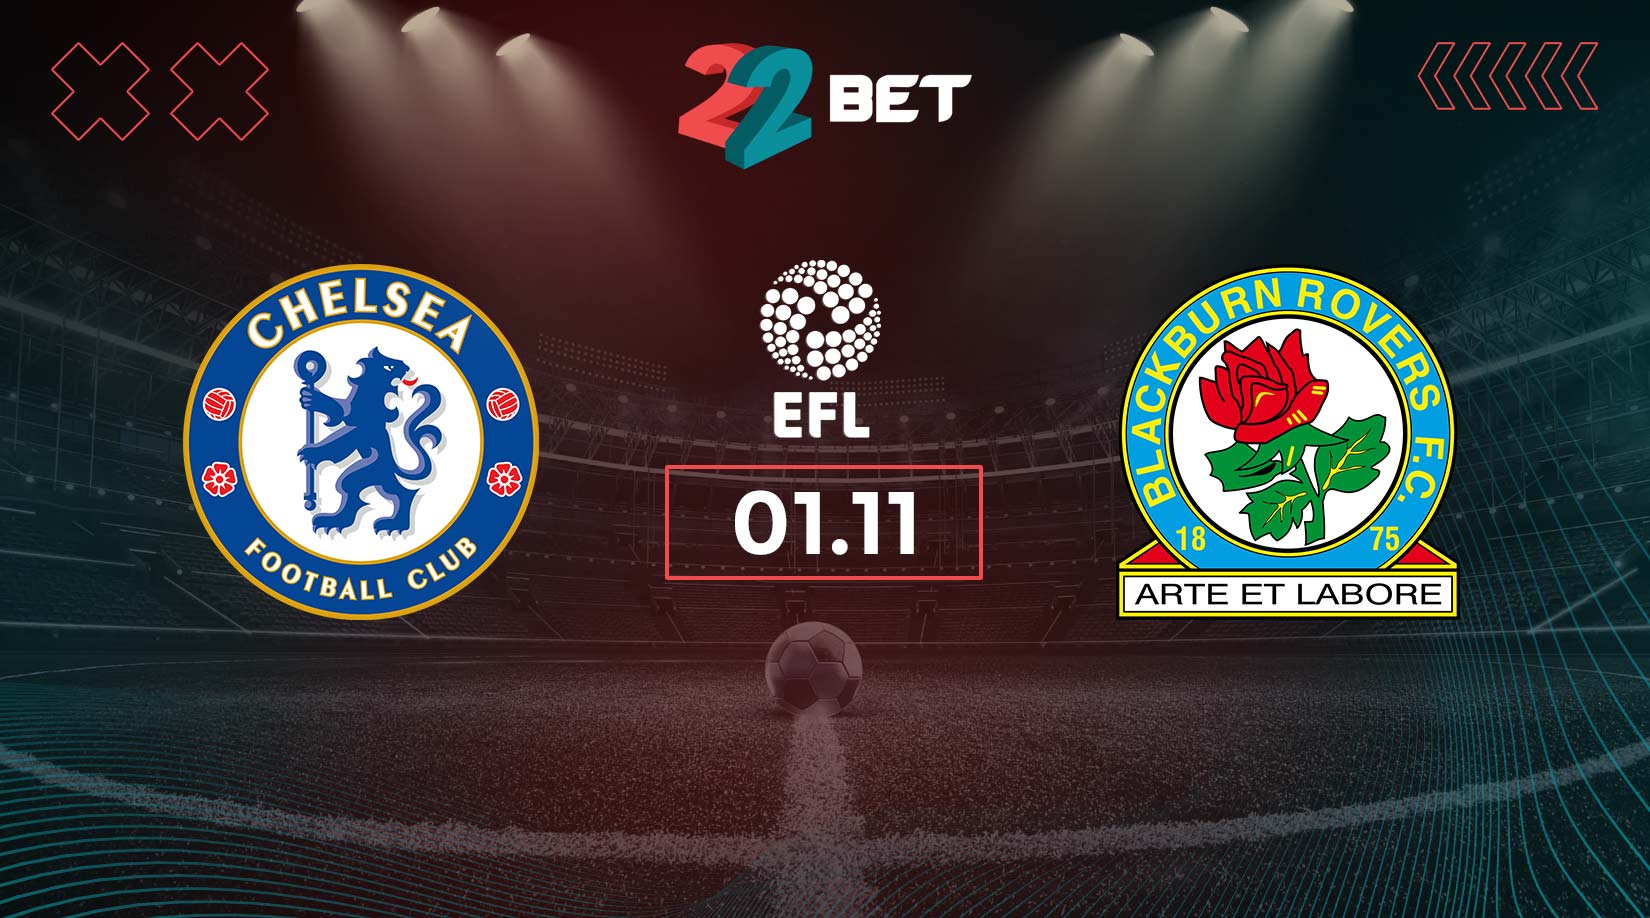 Chelsea vs Blackburn Rovers Prediction: EFL Cup Match